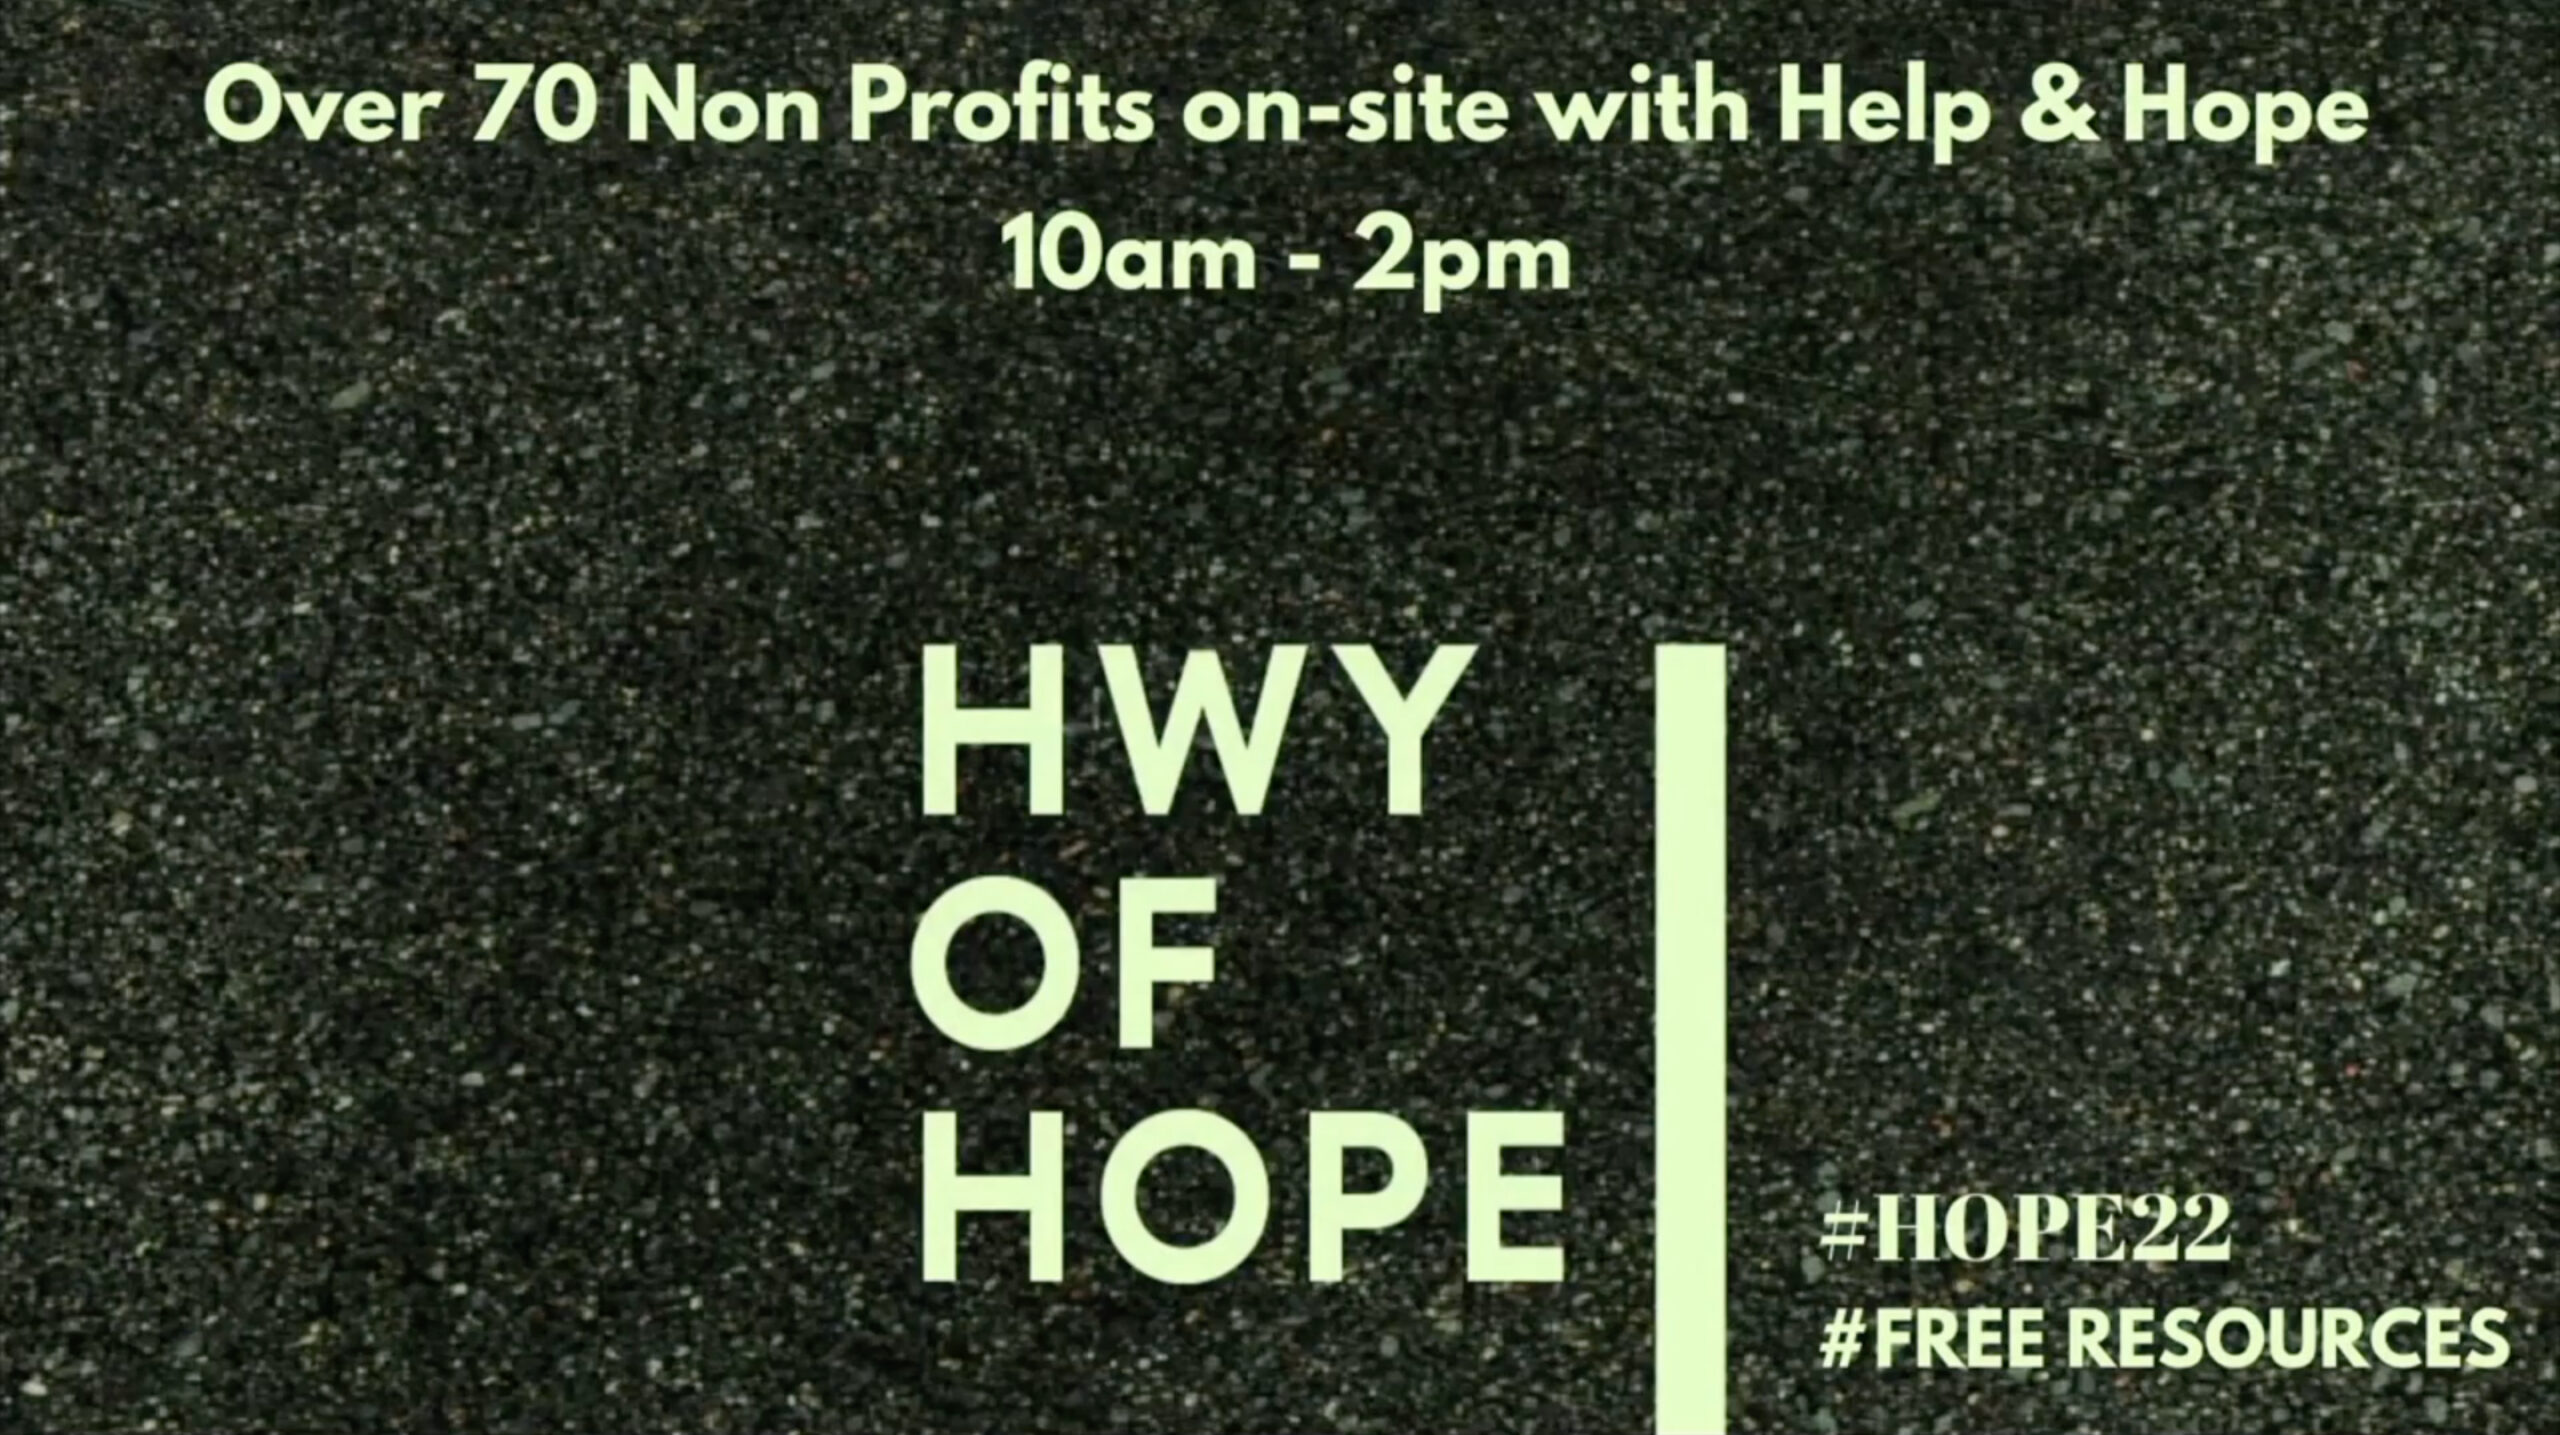 Hope Festival 22 - Saturday 9/17